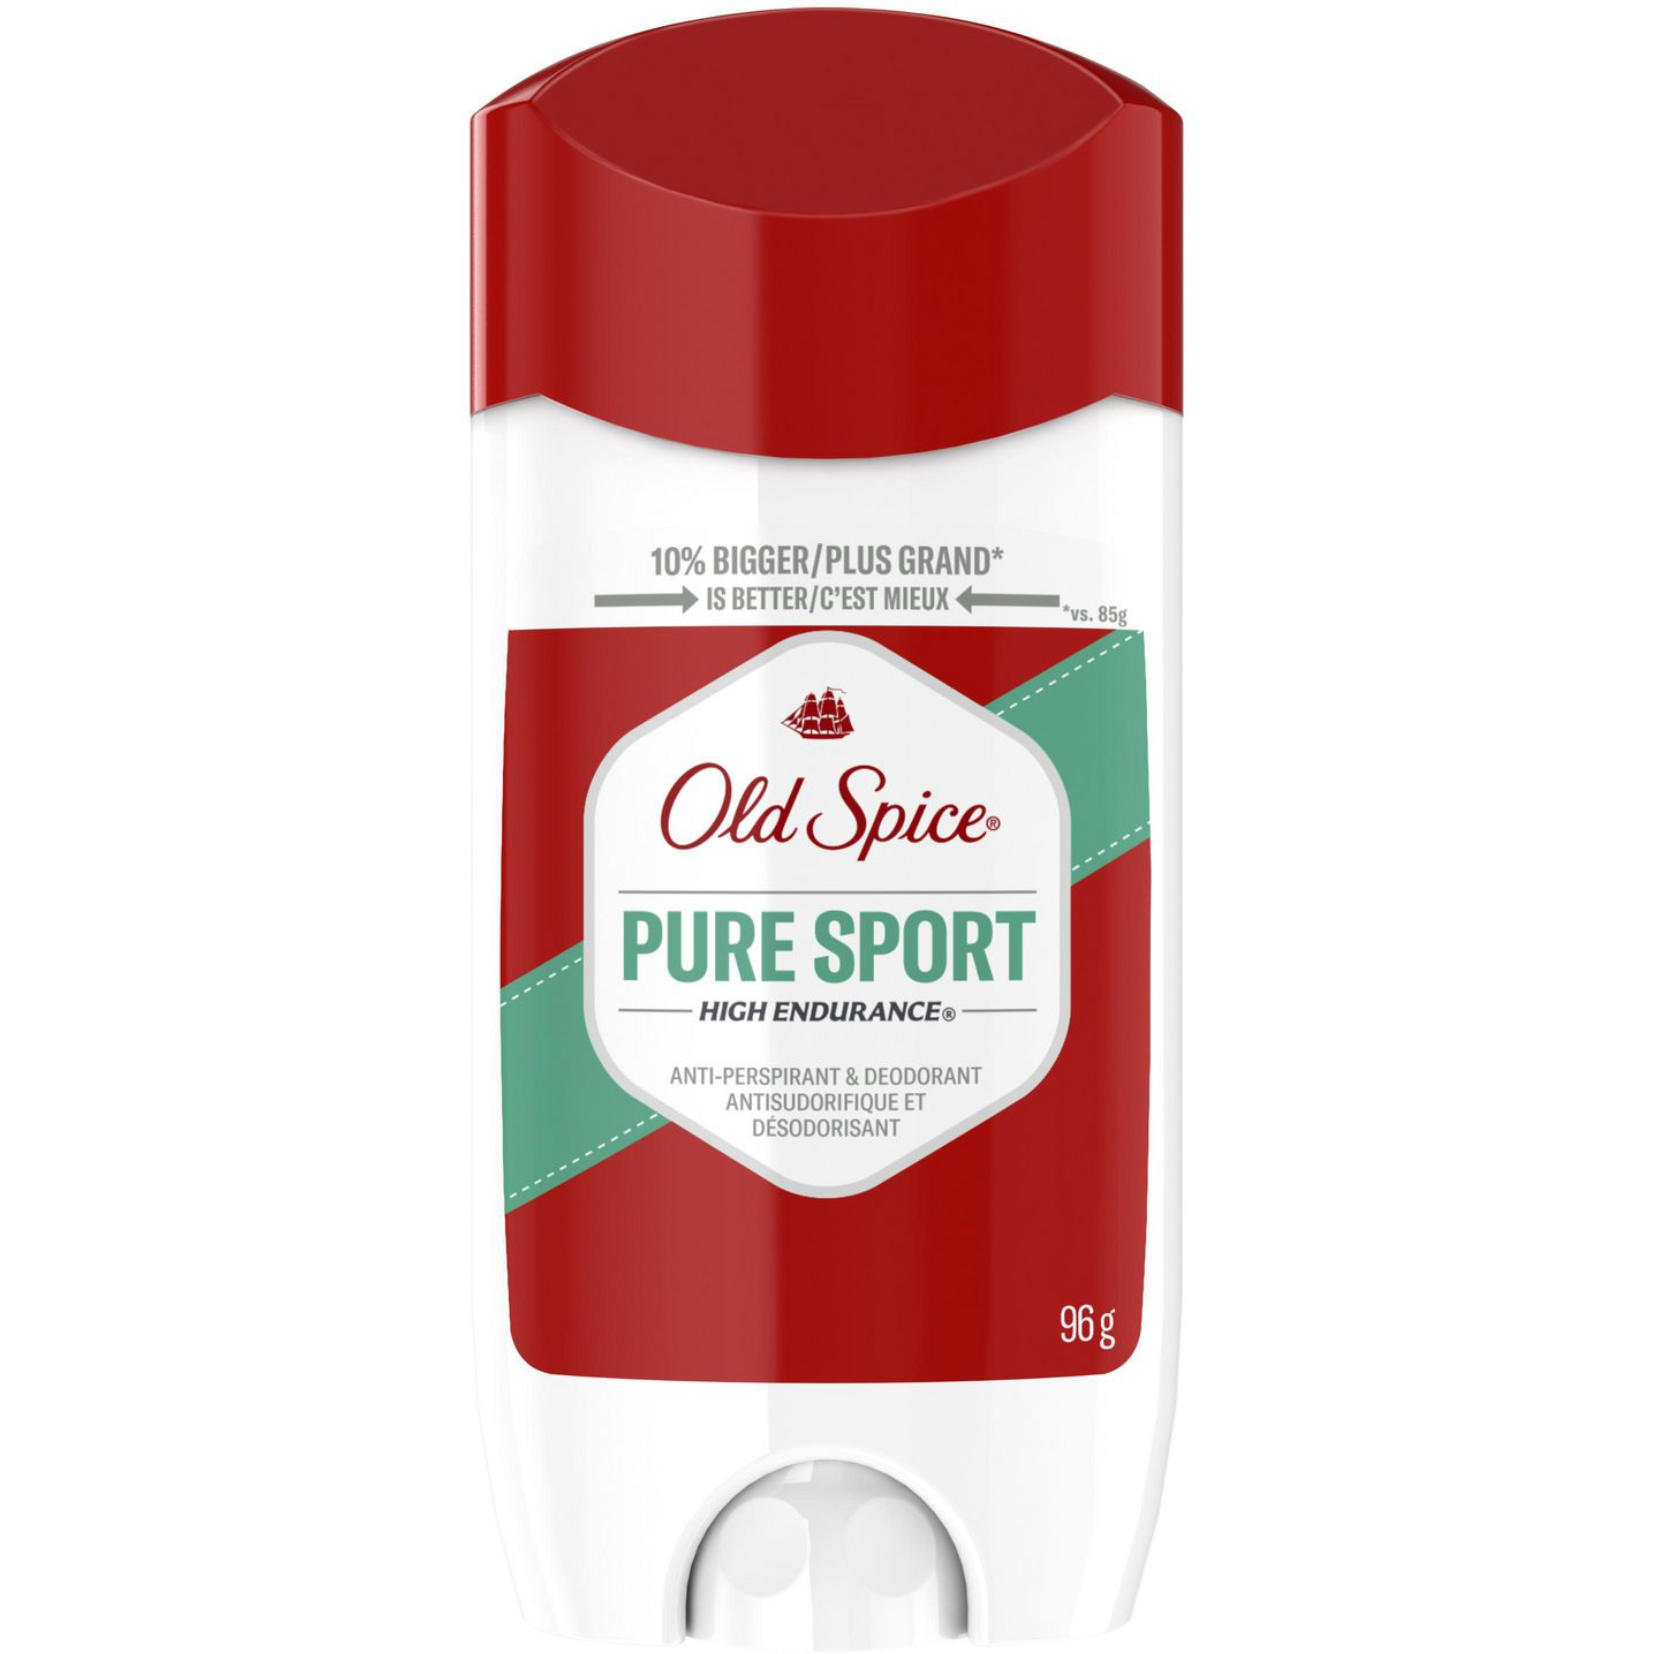 Old Spice Pure Sport Antiperspirant 96g